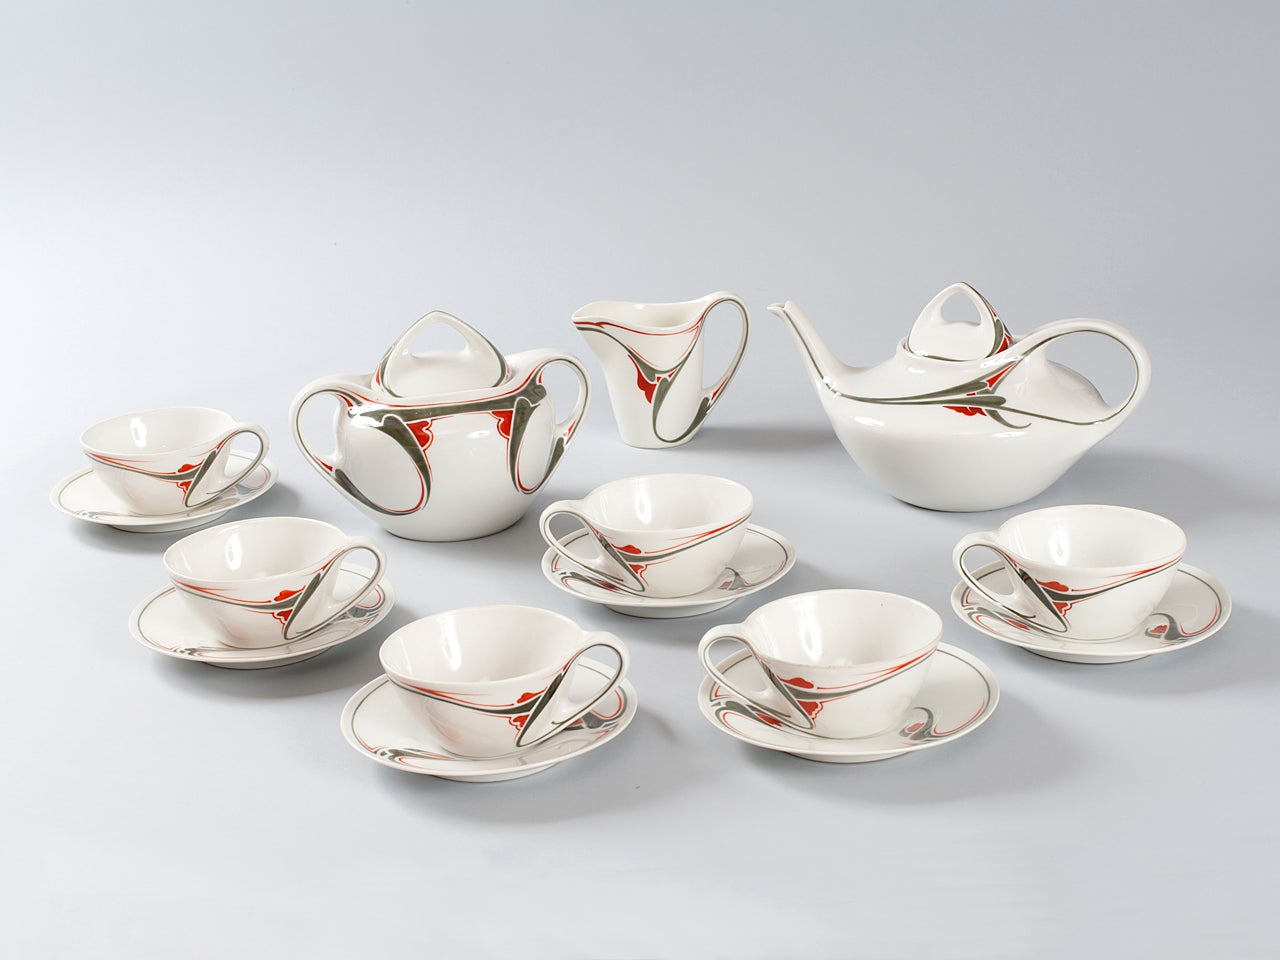 Art Nouveau Ceramic Tea Set by Maurice Dufrene